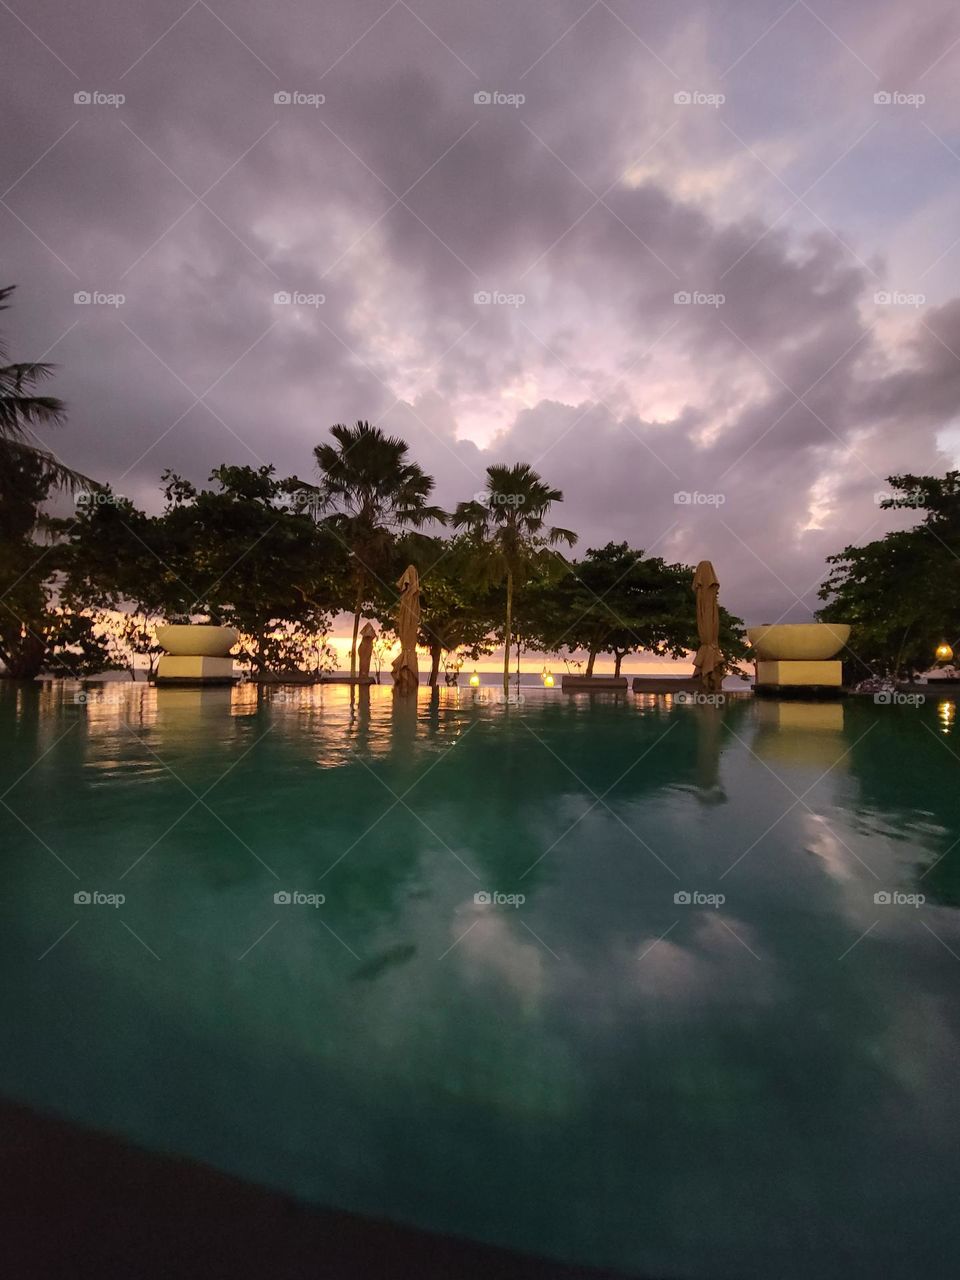 Bali Poolside